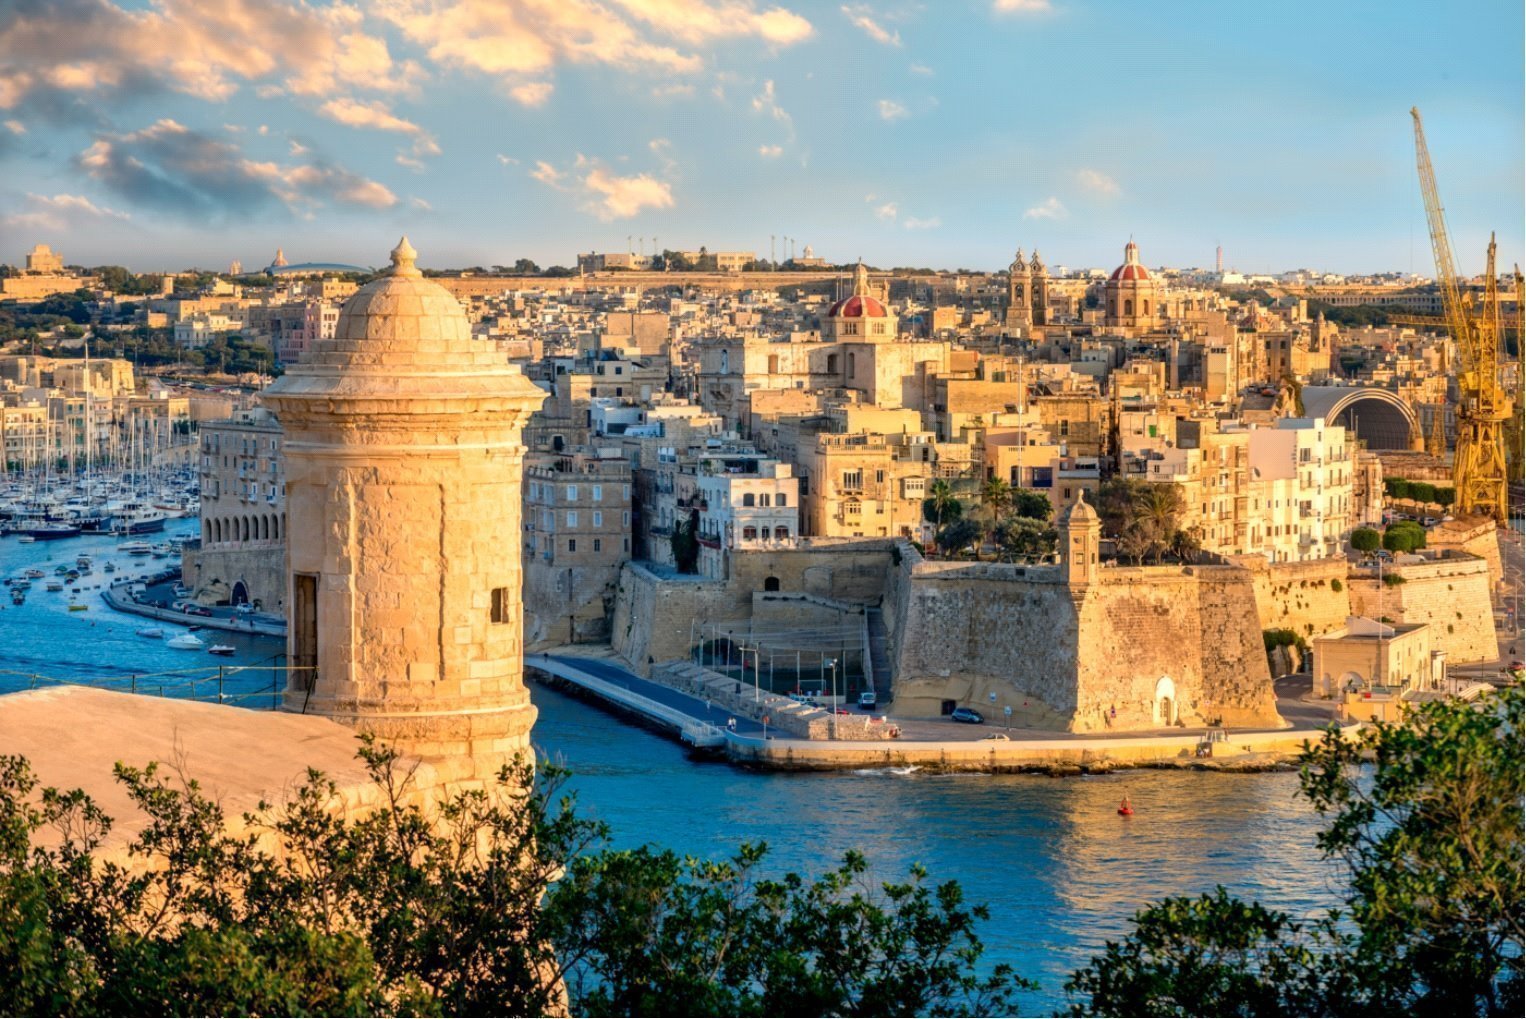 Valetta, Malta - Grand Harbour fortress